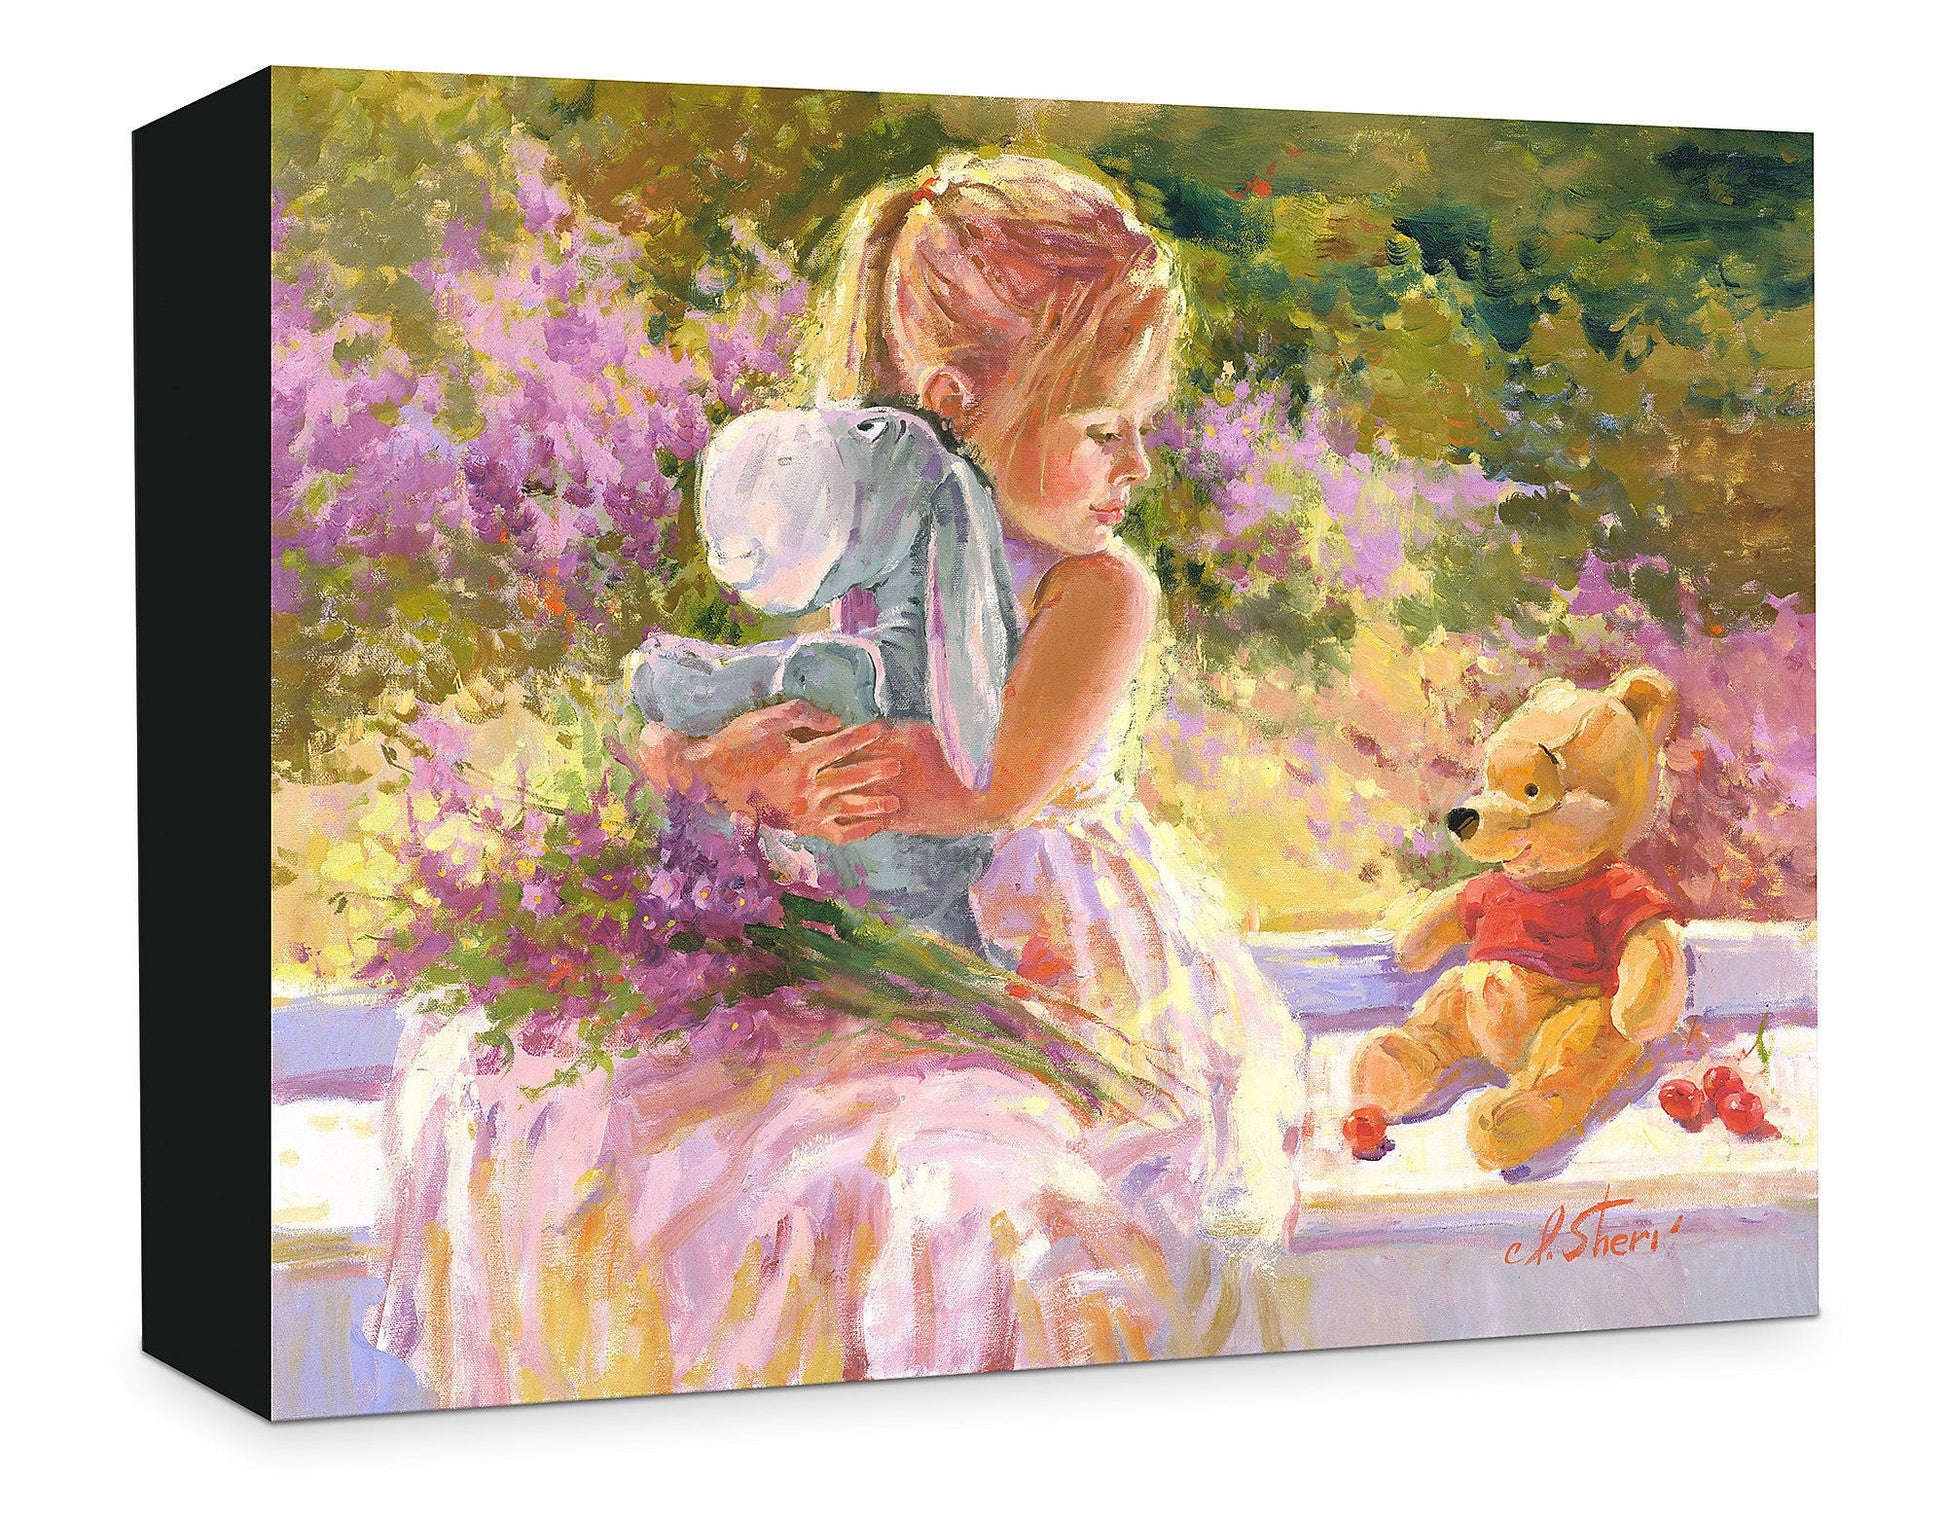 Irene Sheri Disney "Sunny Window" Limited Edition Canvas Giclee